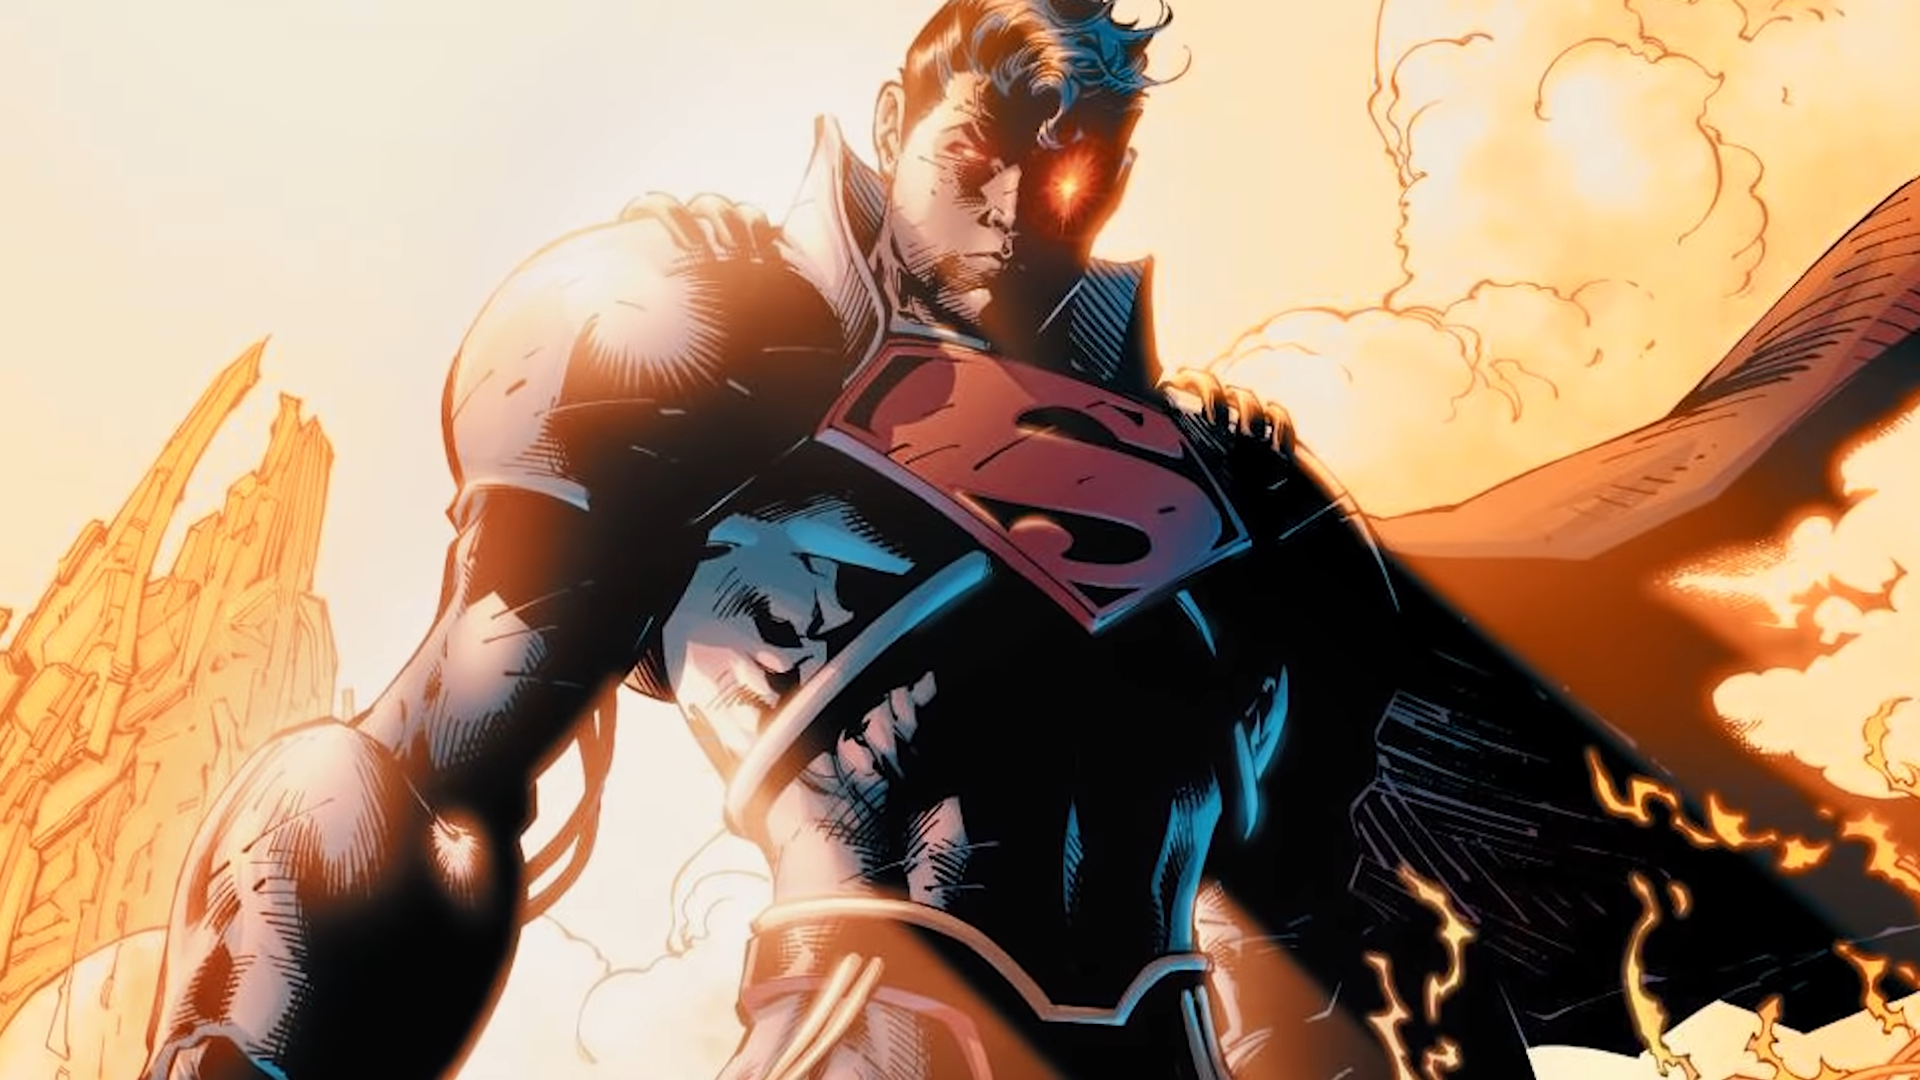 Wallpaper - Superboy 'Young Justice' Logo by Kalangozilla on DeviantArt